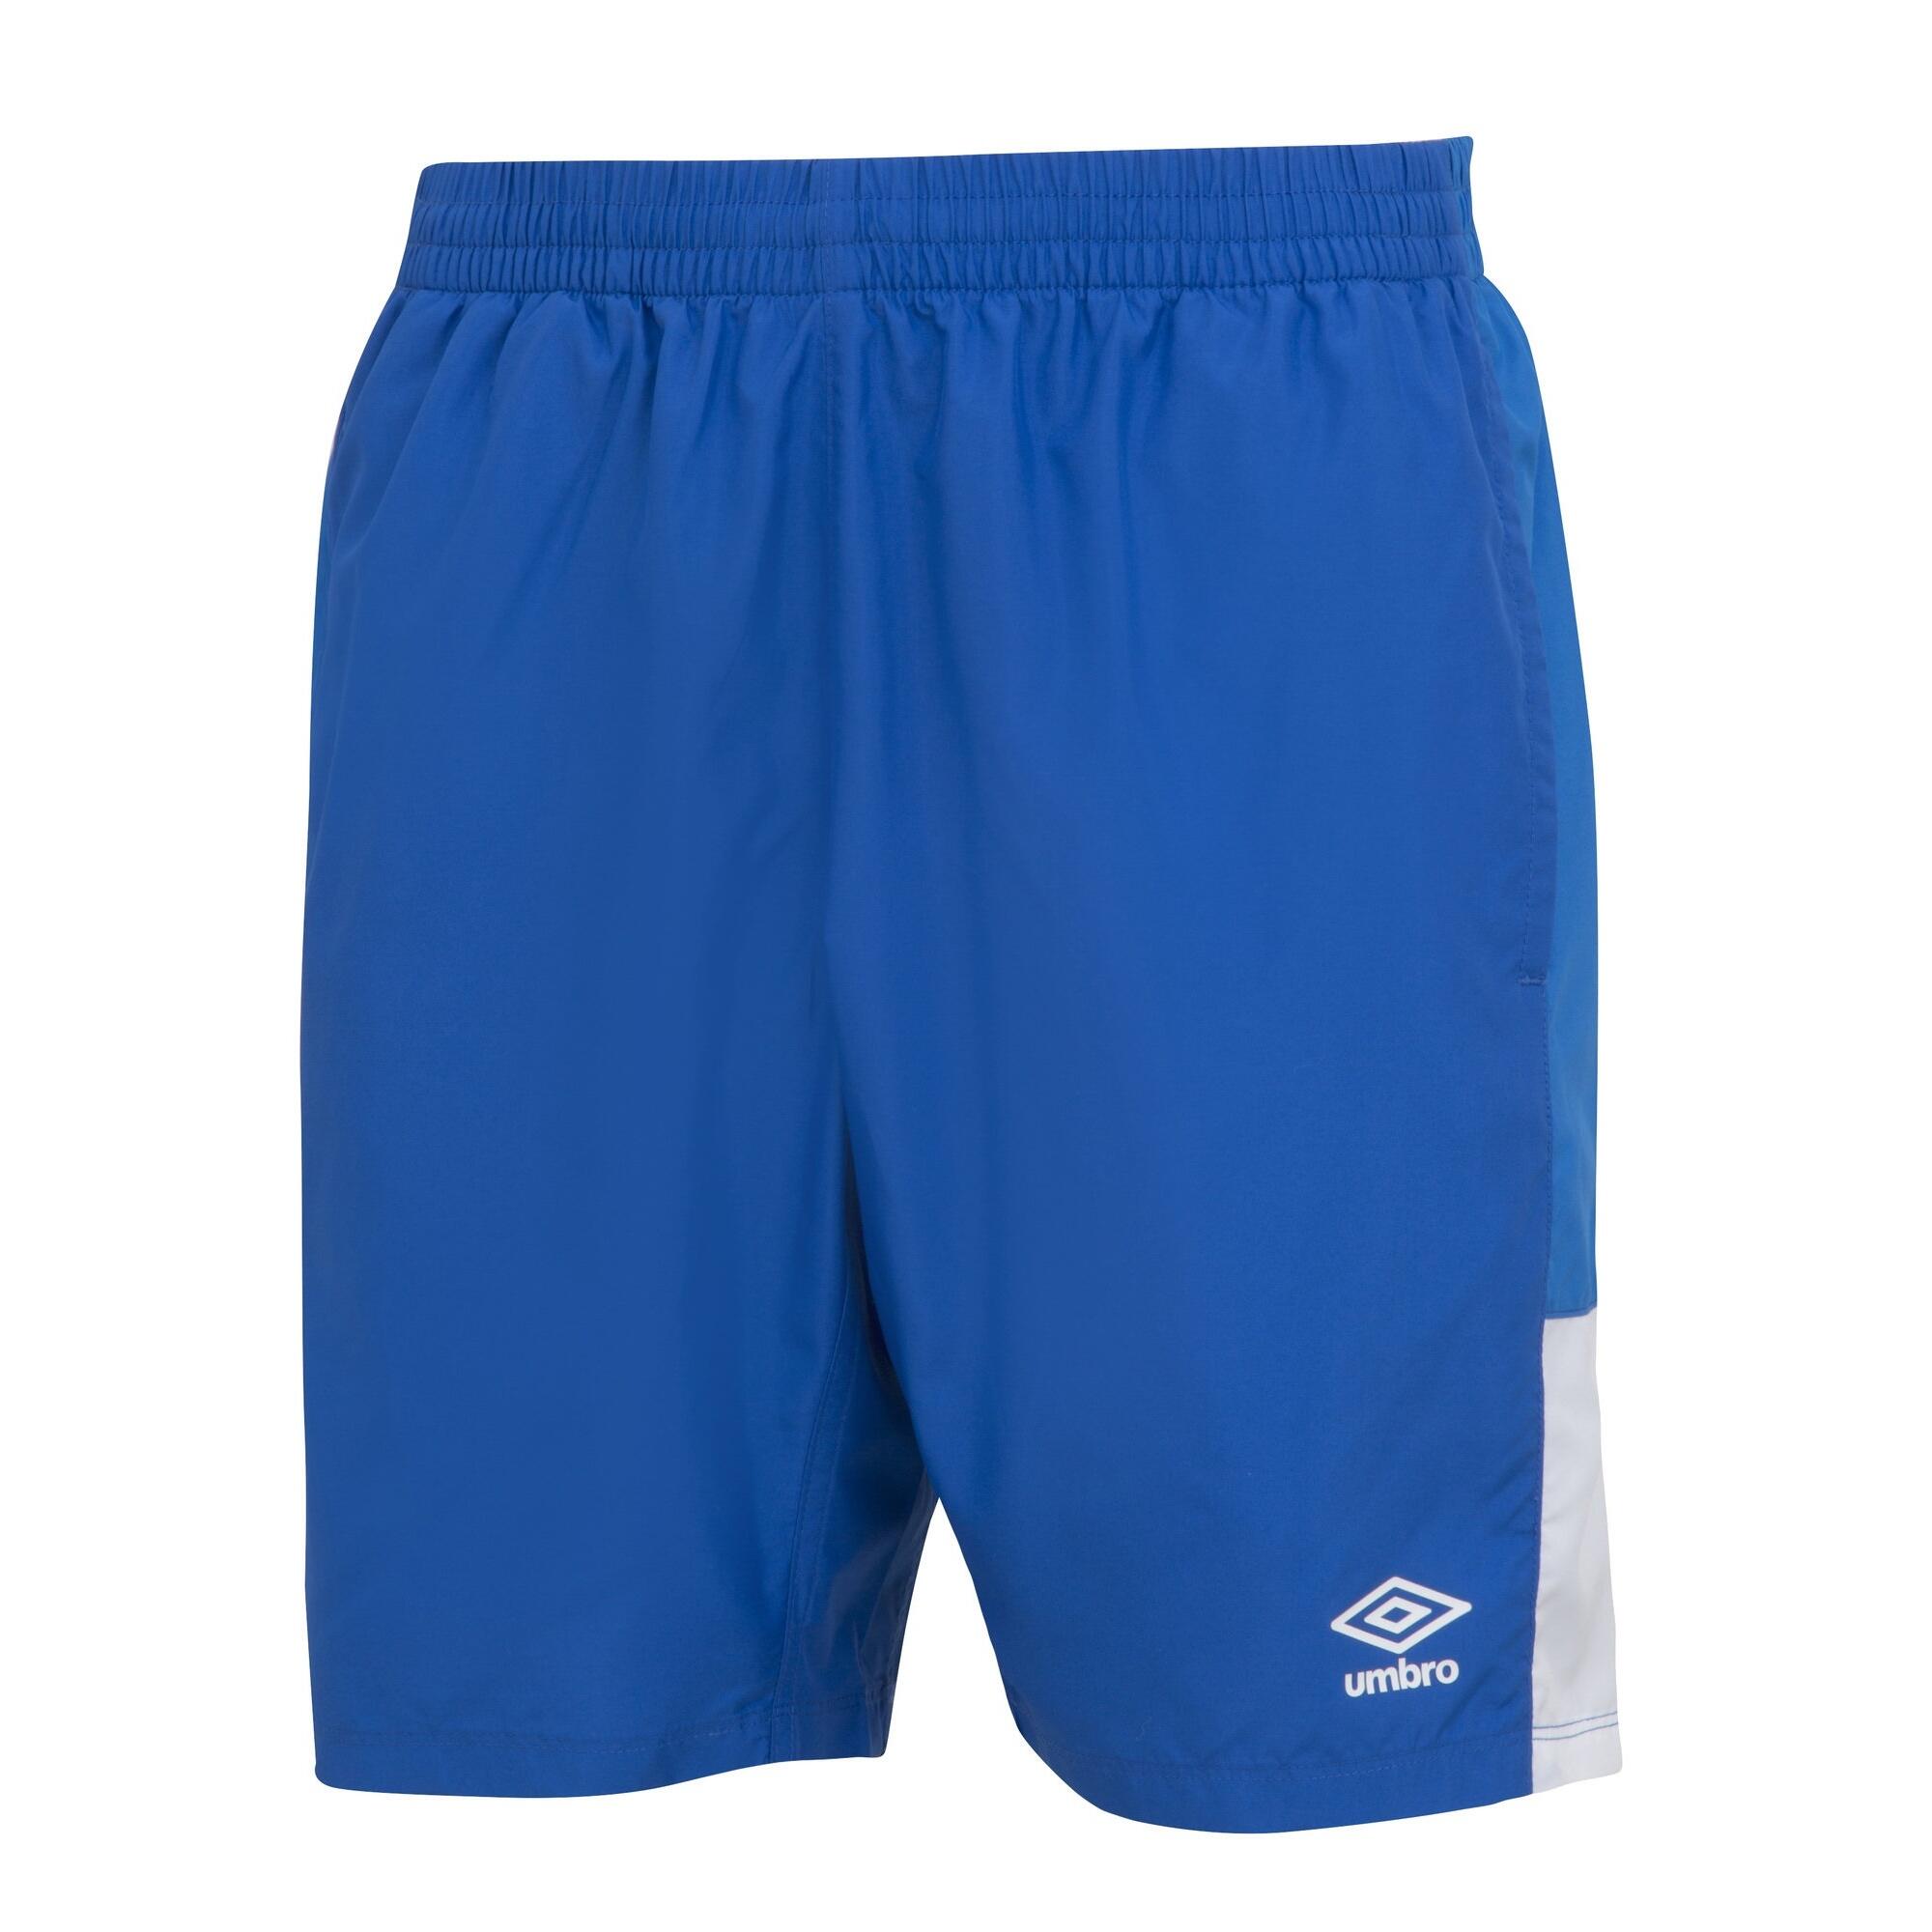 Mens Training Shorts (Royal Blue/French Blue/White) 3/4